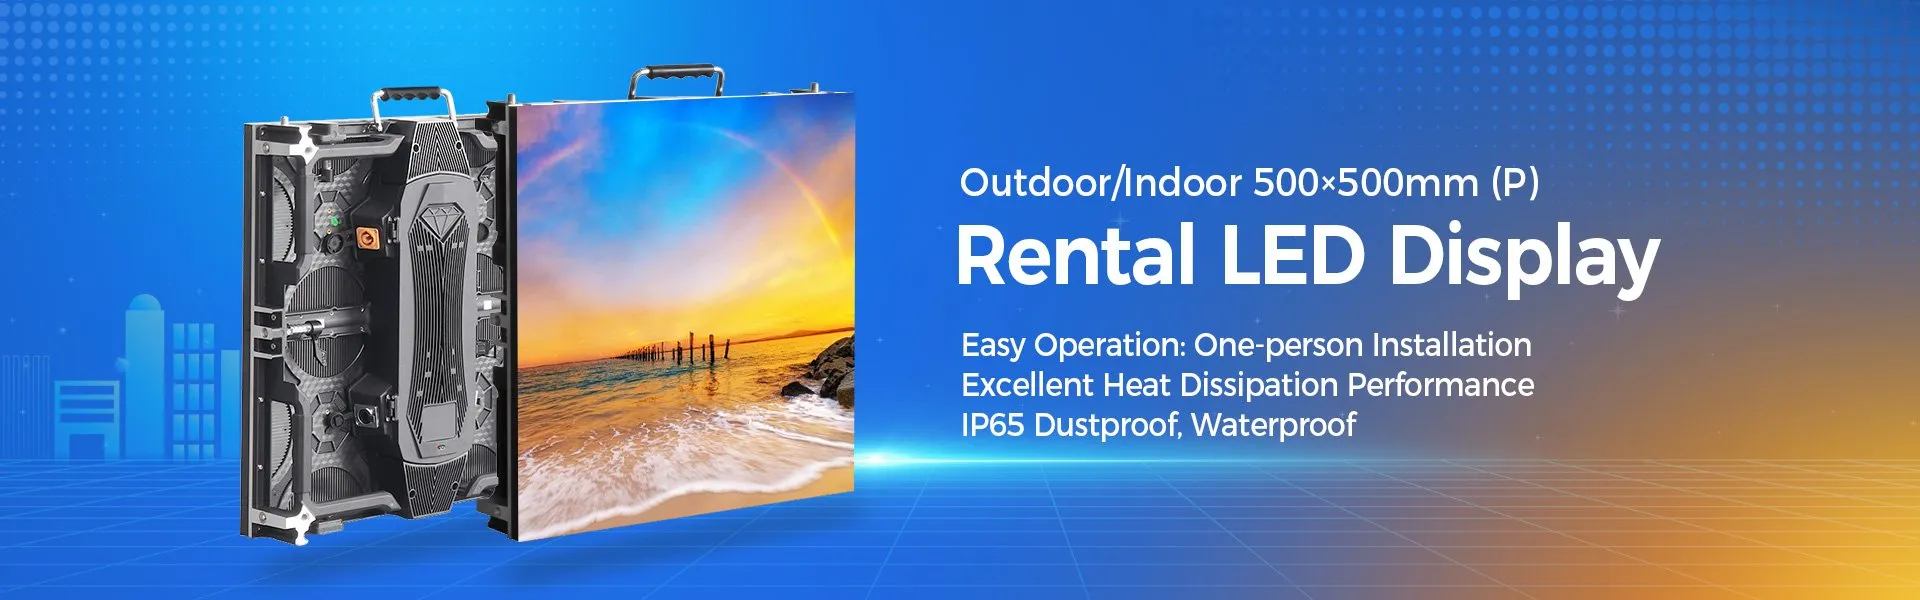 P1.5 P1.953 P2.604 P2.976 P3.91 P4.81 Indoor Outdoor Waterproof 500×500 Rental LED Display 500P series